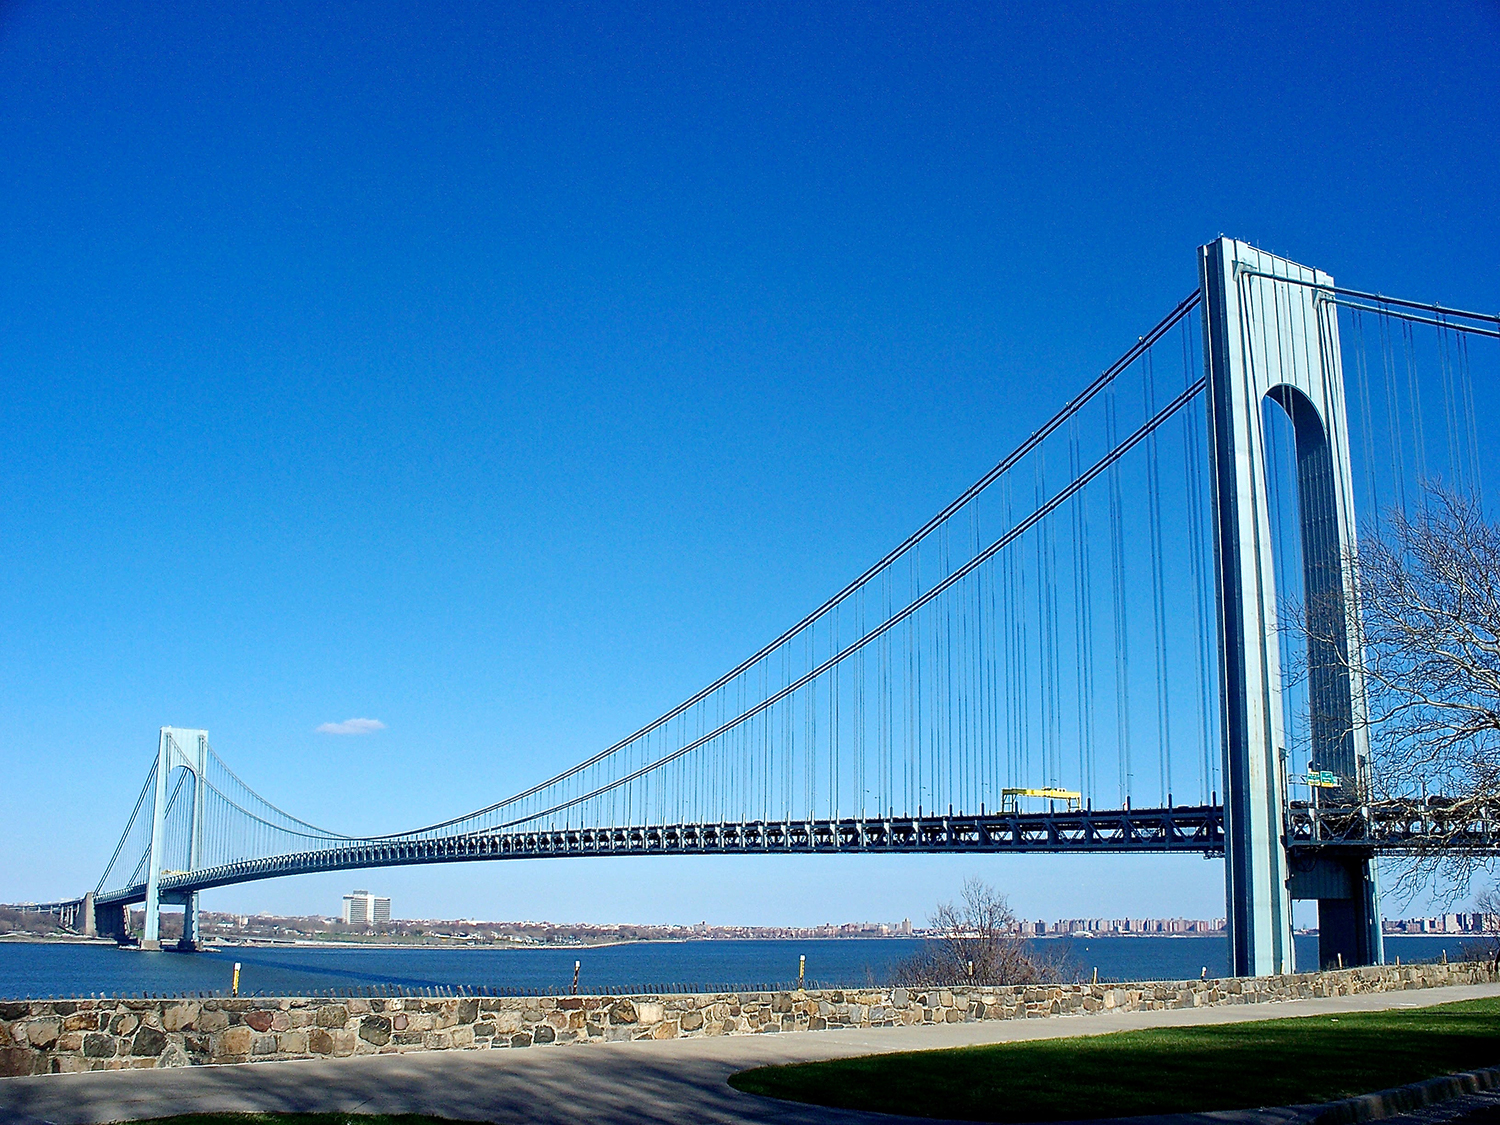 The Verrazano Bridge that links Staten Island and Brooklyn